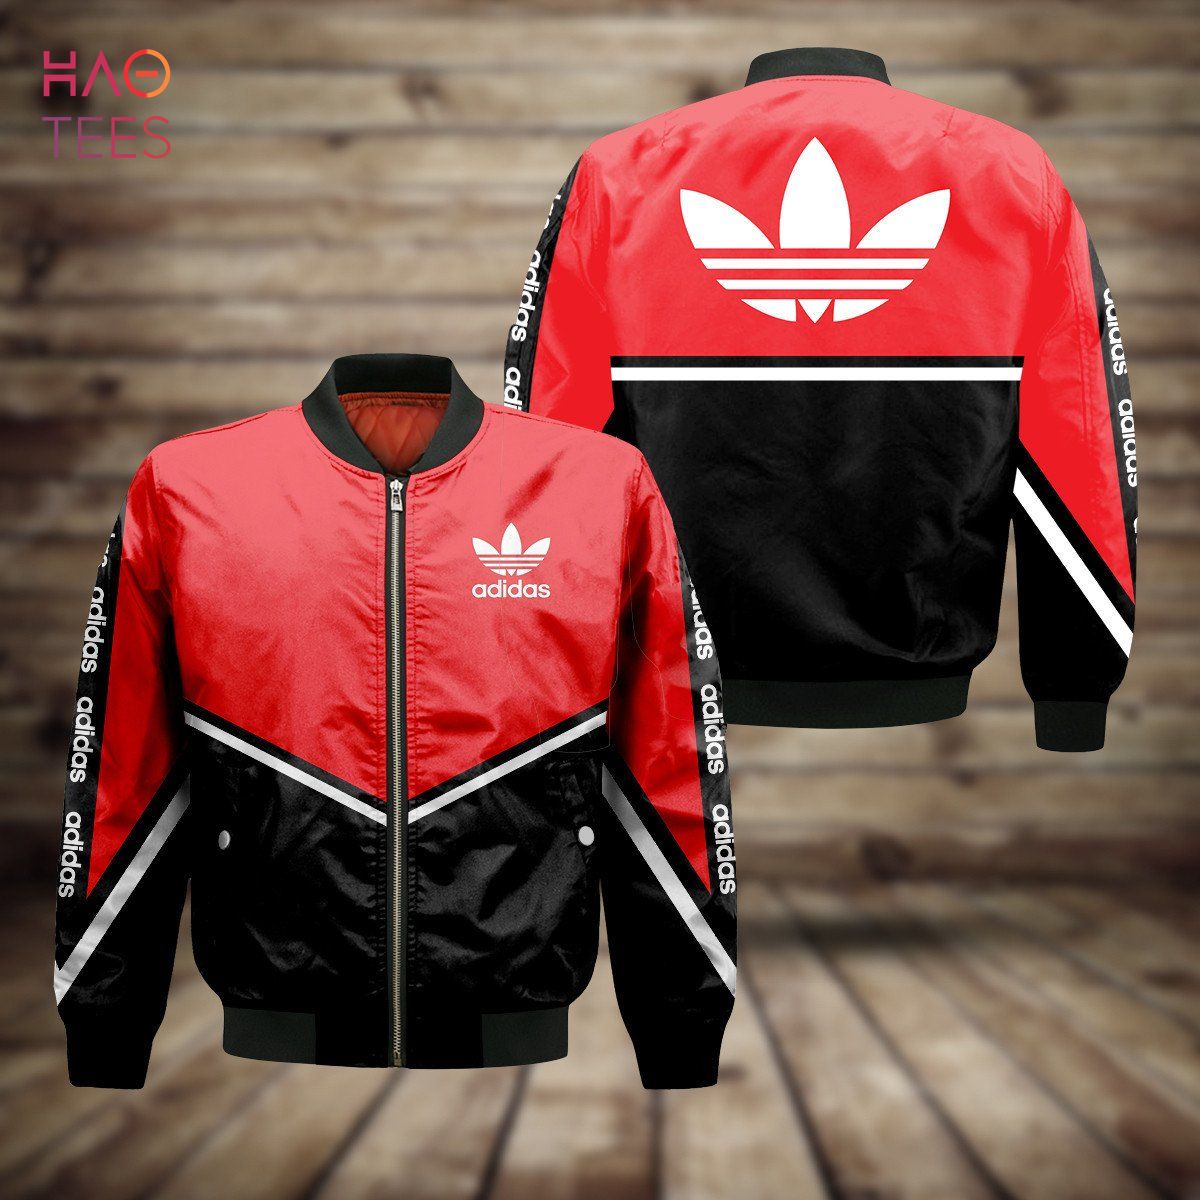 HOT Adidas Luxury Brand Red Mix Black Bomber Jacket Limited Edition